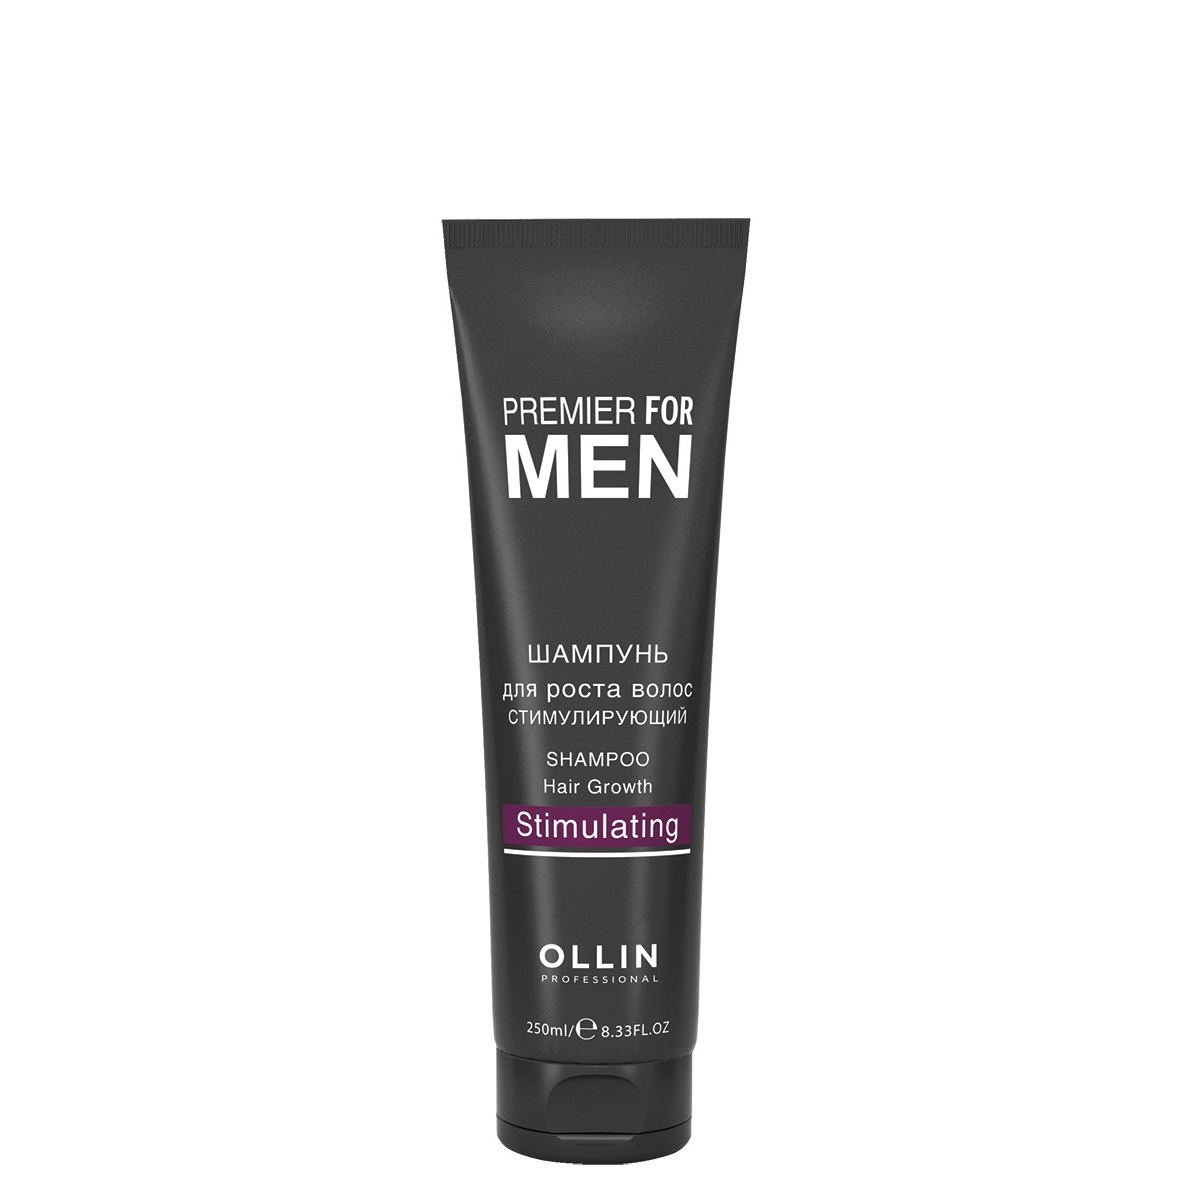 Шампунь Ollin Professional Premier for Men Для роста стимулирующий 250 мл ollin professional шампунь для роста волос стимулирующий ollin premier for men